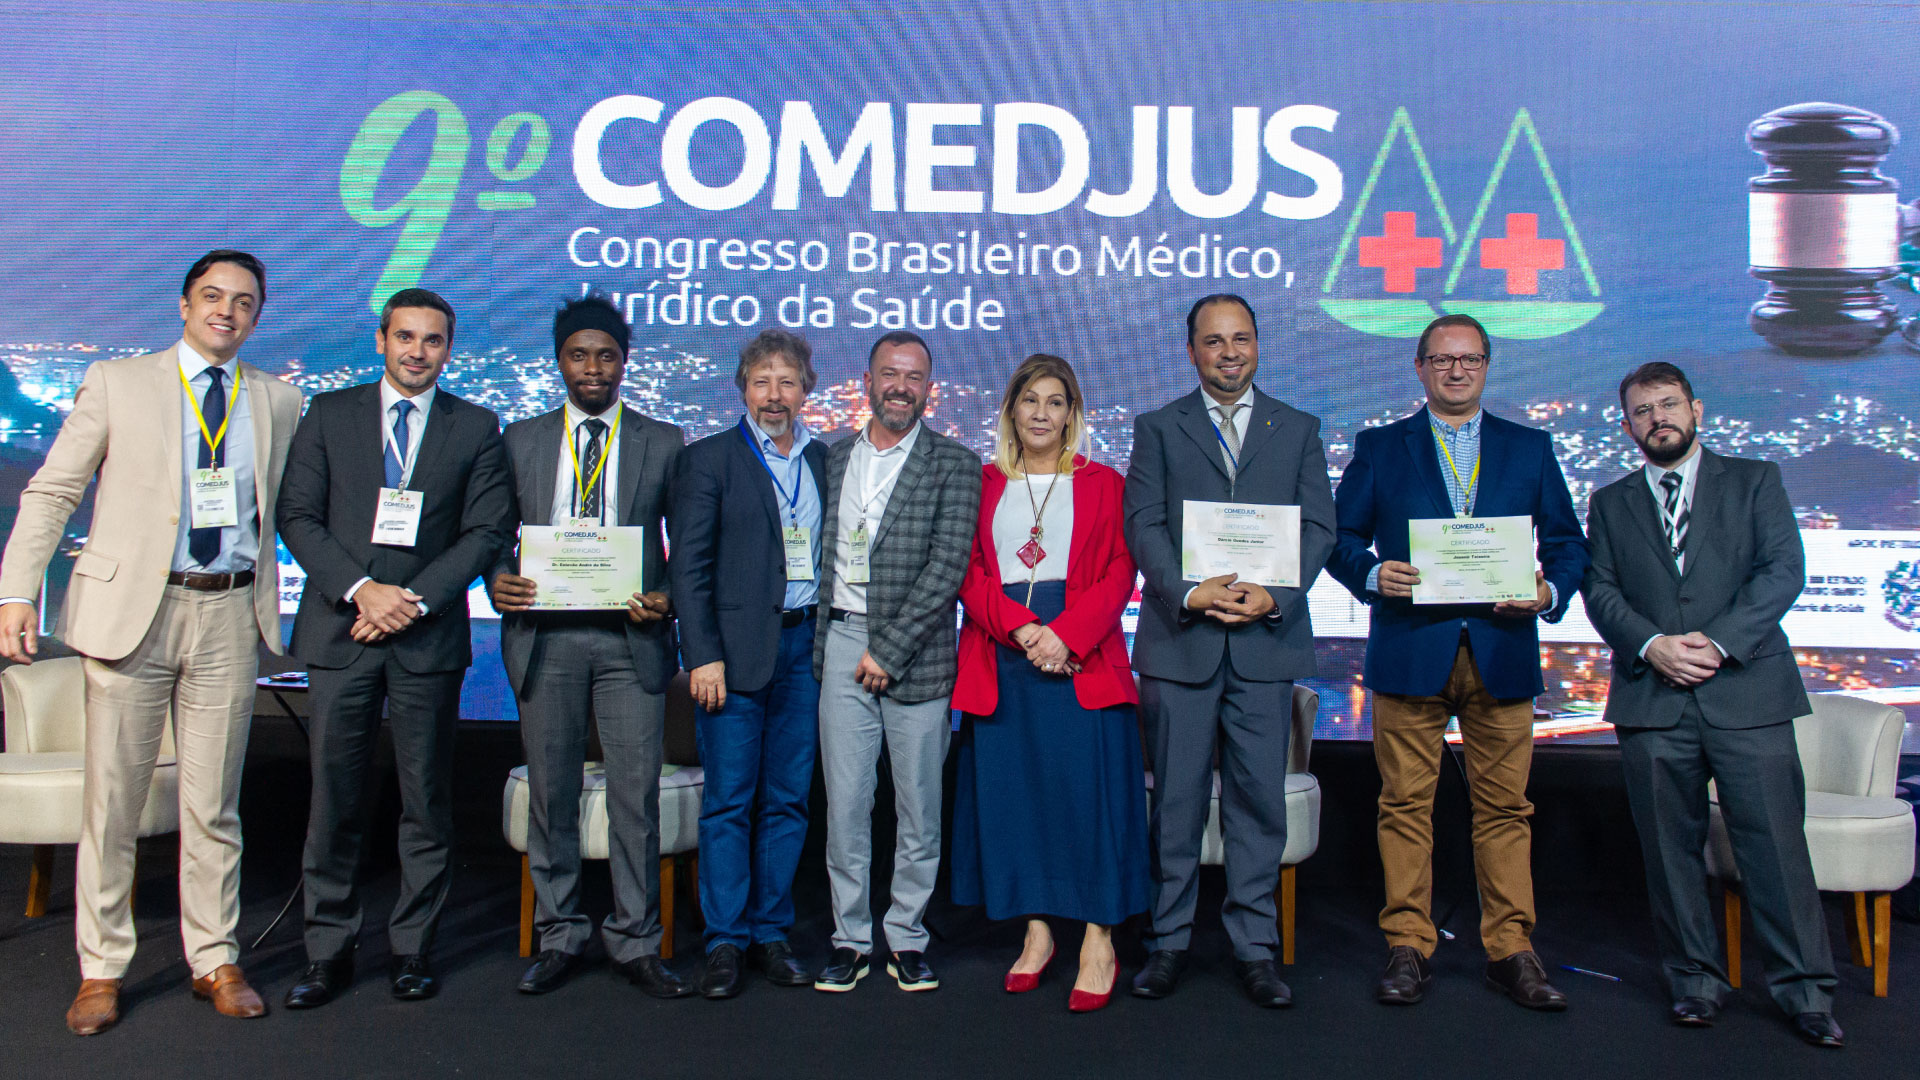 9 congresso brasileiro medico juridico da saude 5